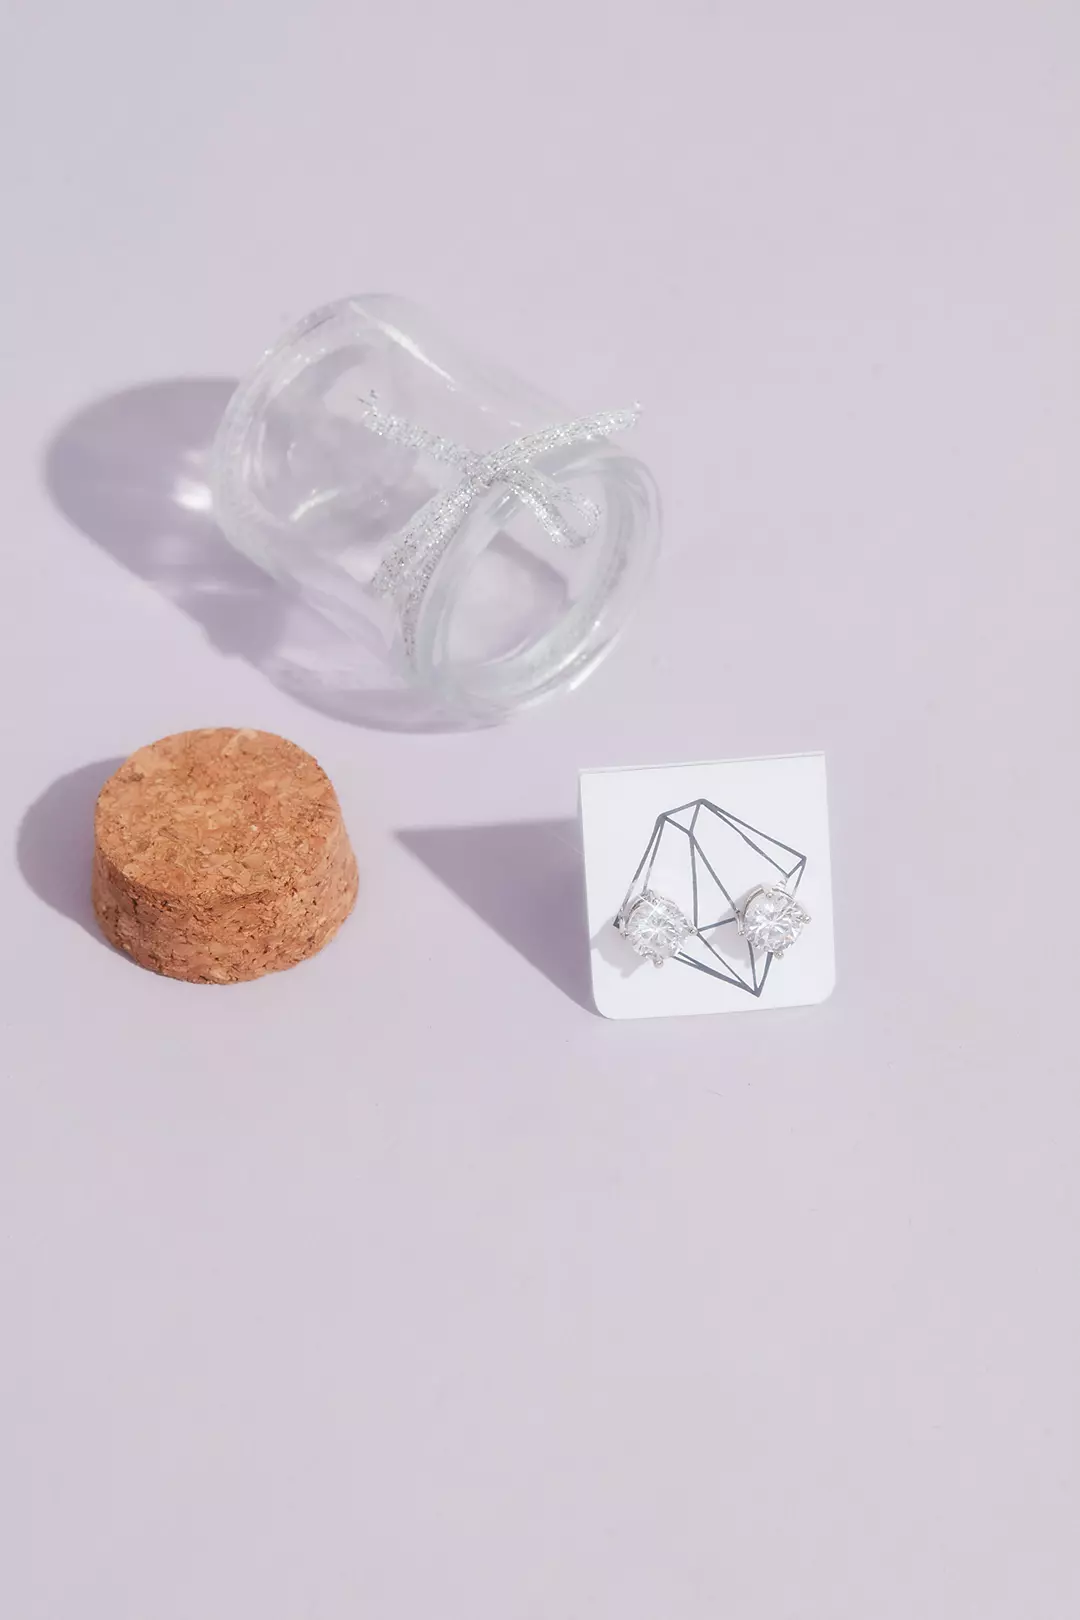 Cubic Zirconia Earrings in a Jar Bridesmaid Gift Image 2